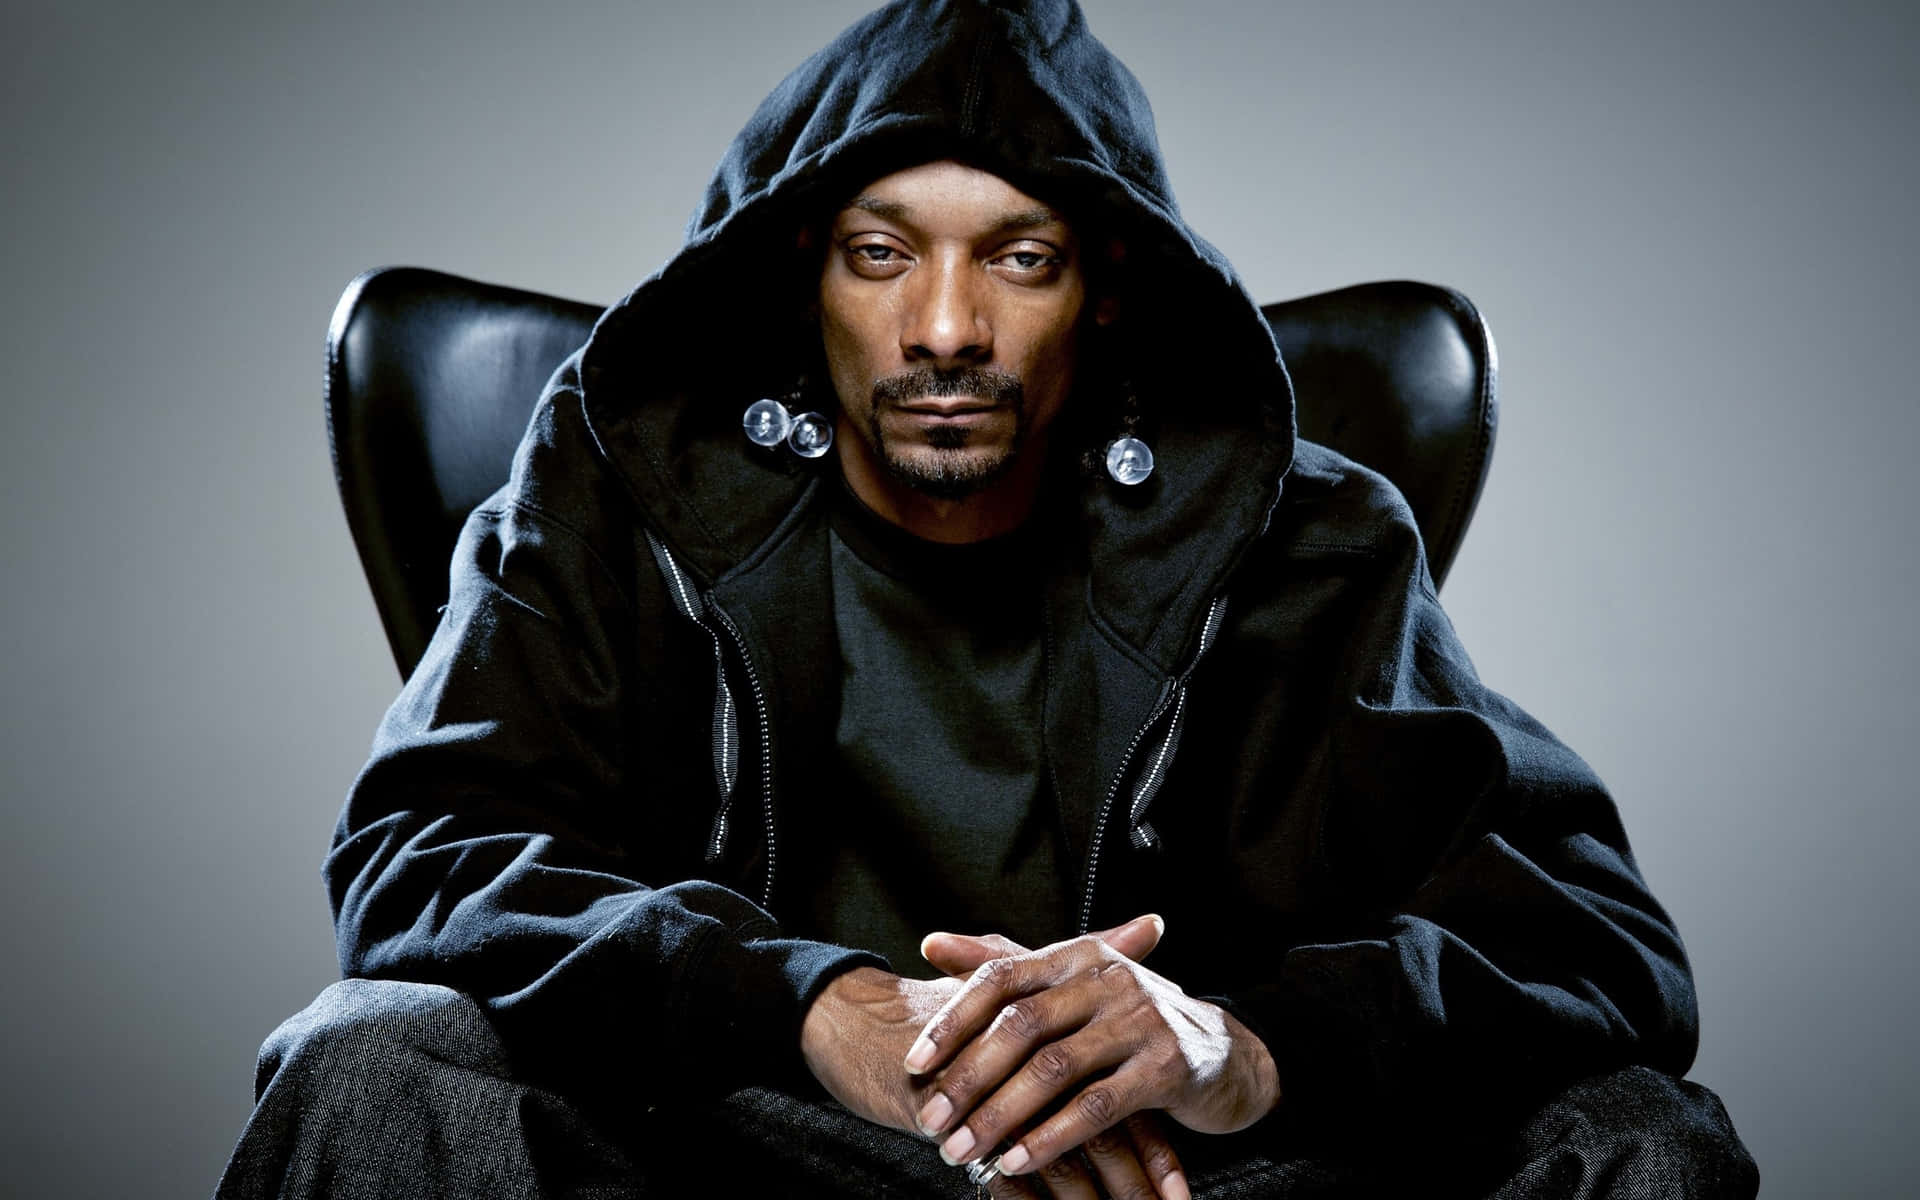 Der Junge Snoop Dogg 2560 X 1600 Wallpaper